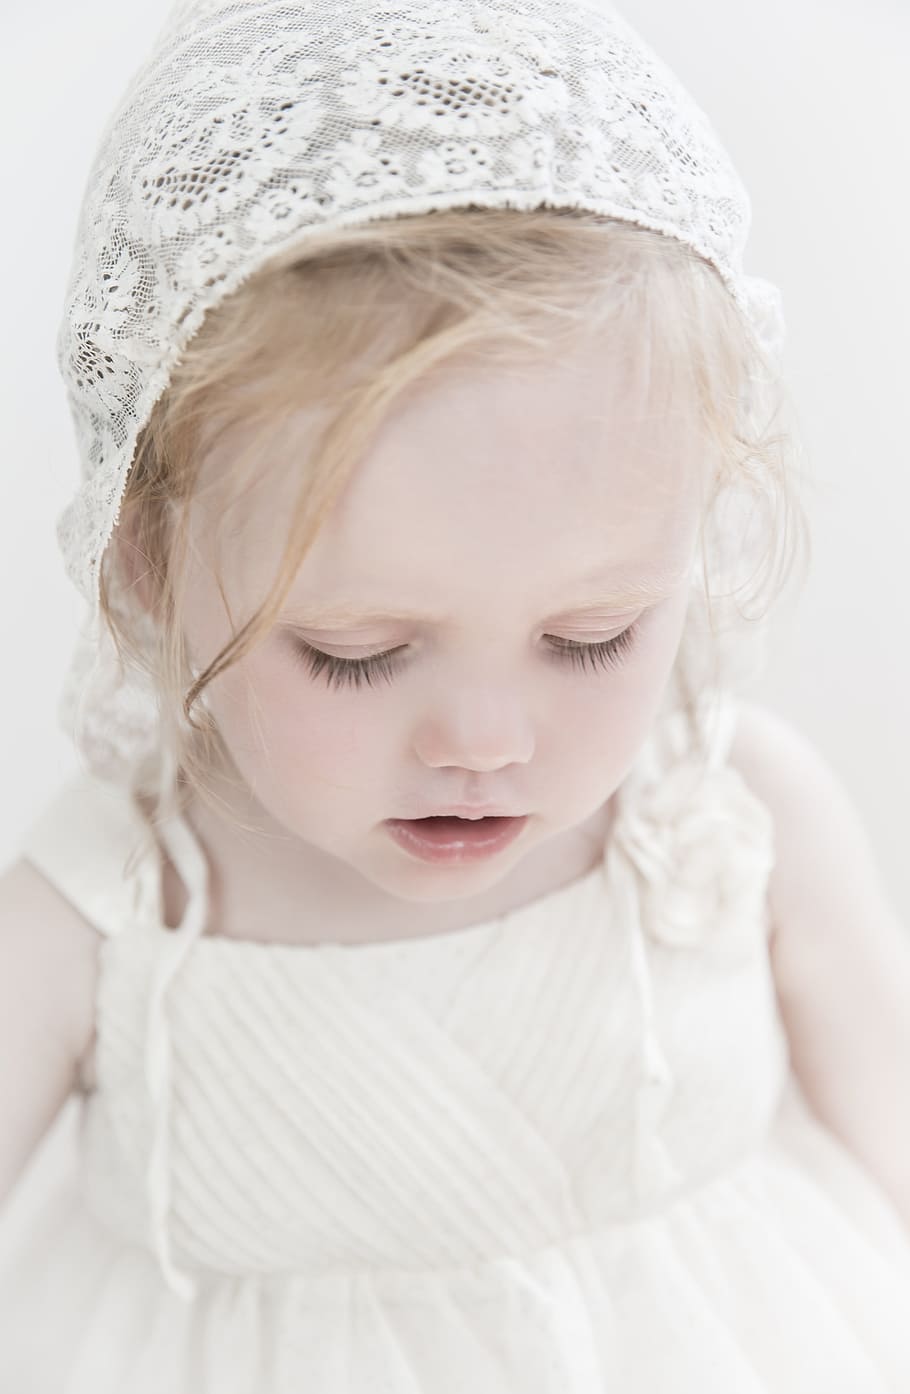 vestido blanco de niña, niña, niño, blanco, ojos azules, rubia, infancia, una persona, niñas, inocencia